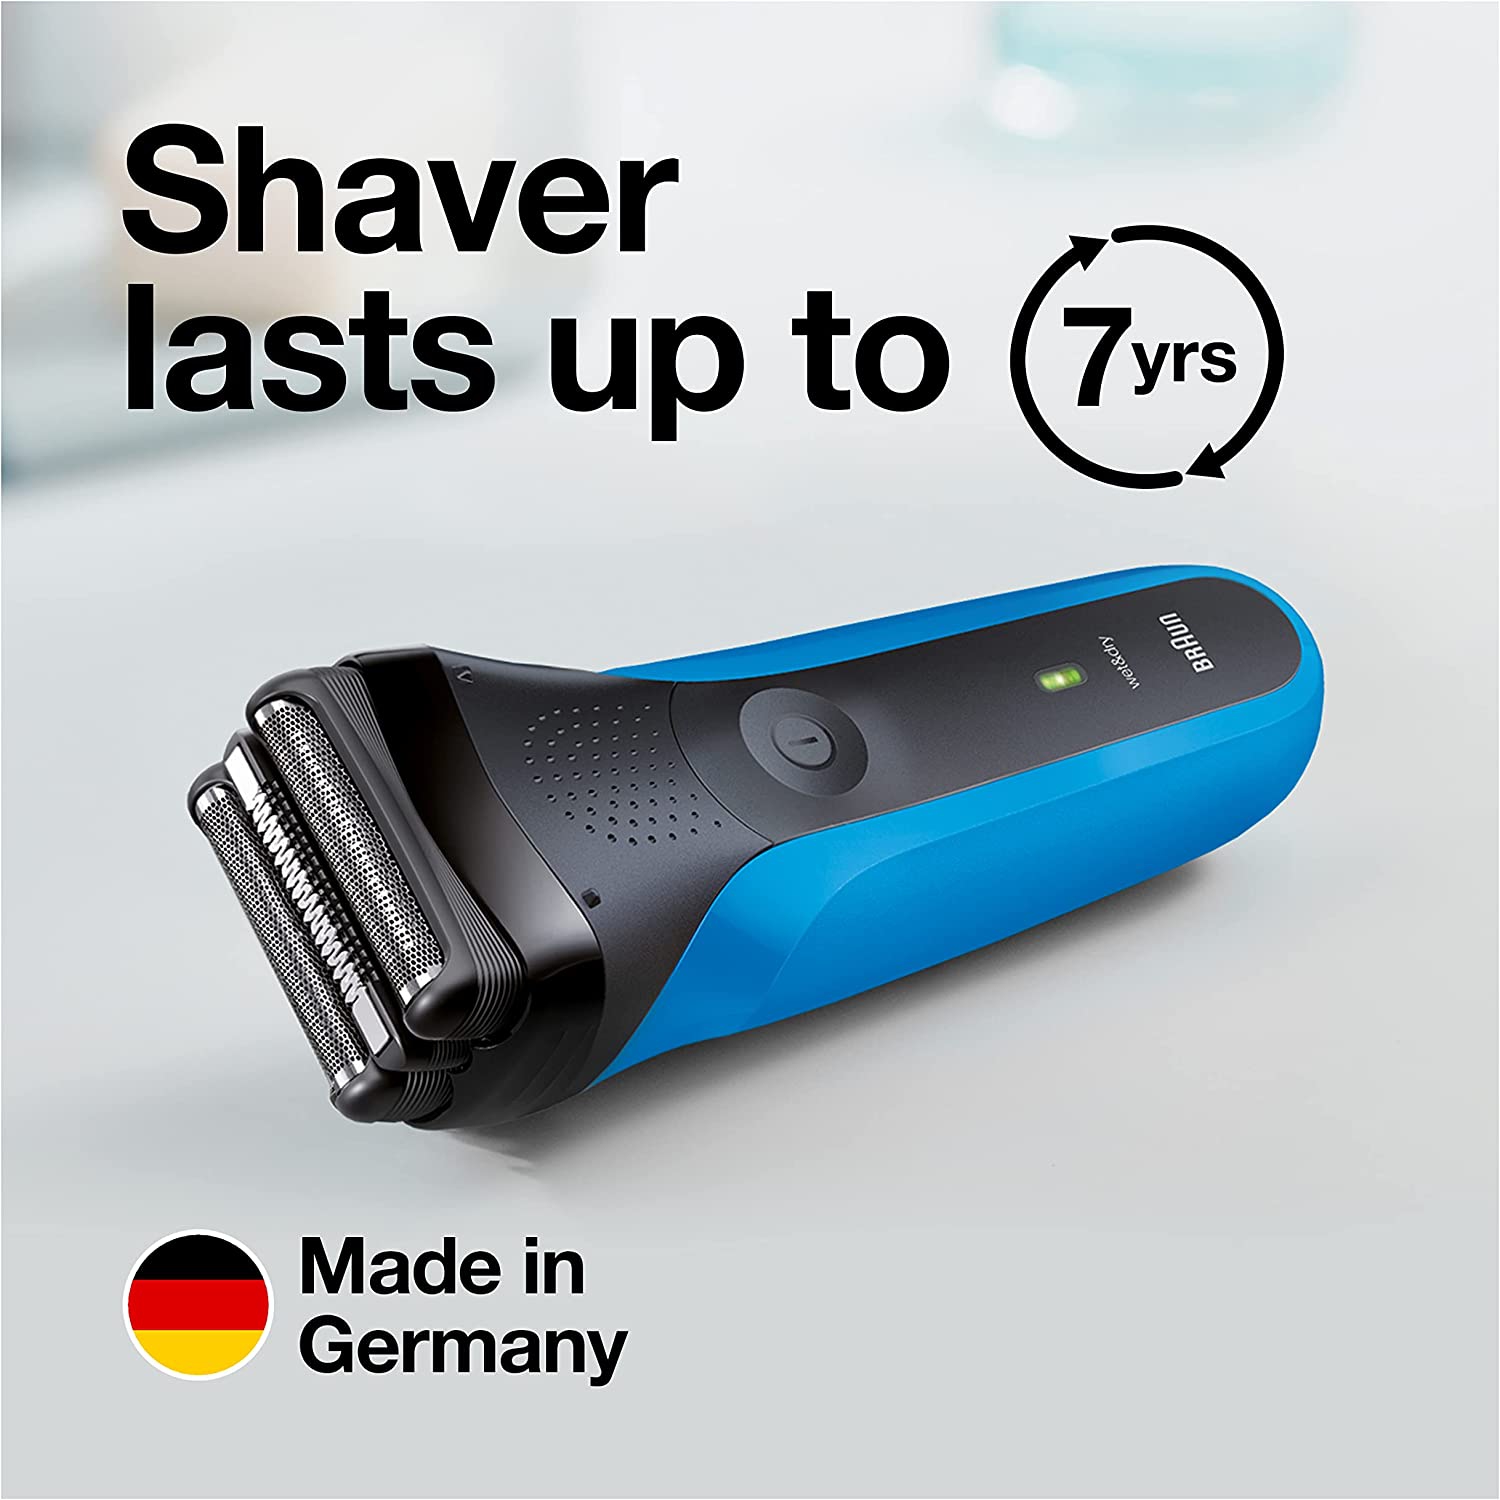 Braun Series 3 310 Electric Shaver & Razor for Men